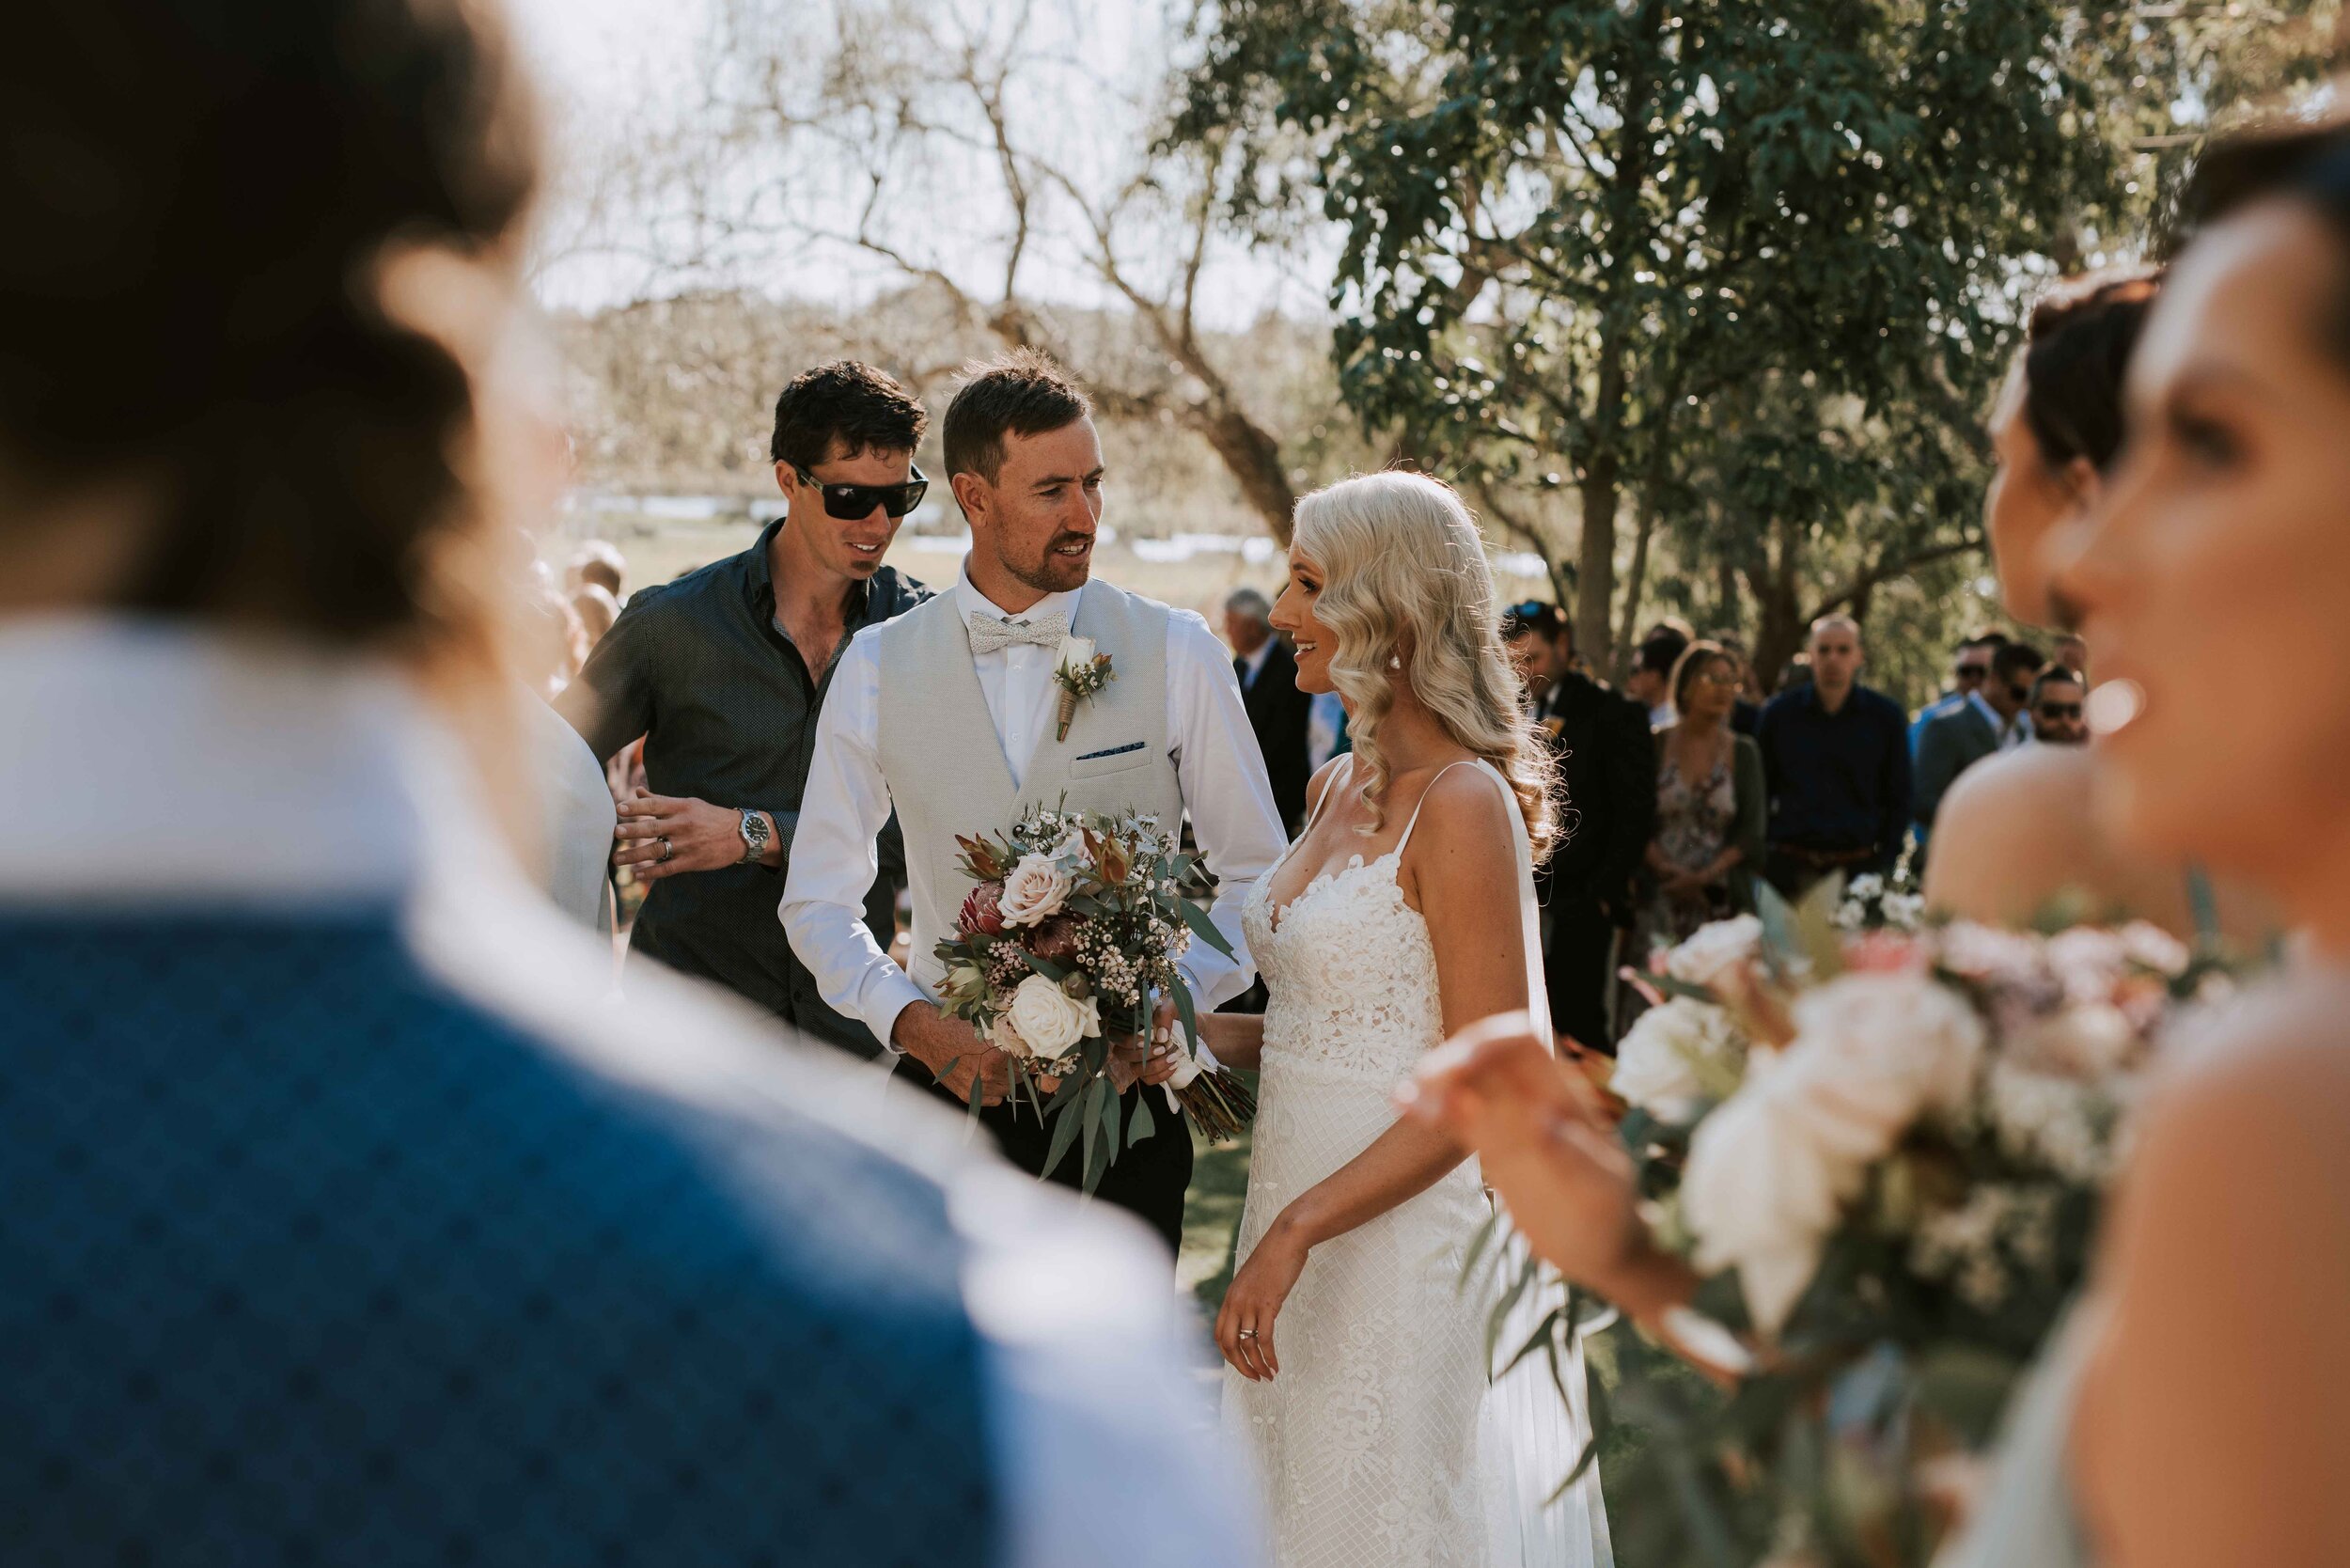 Yanchep park beautiful spring wedding | Perth wedding photographer Amy Skinner-433.jpg